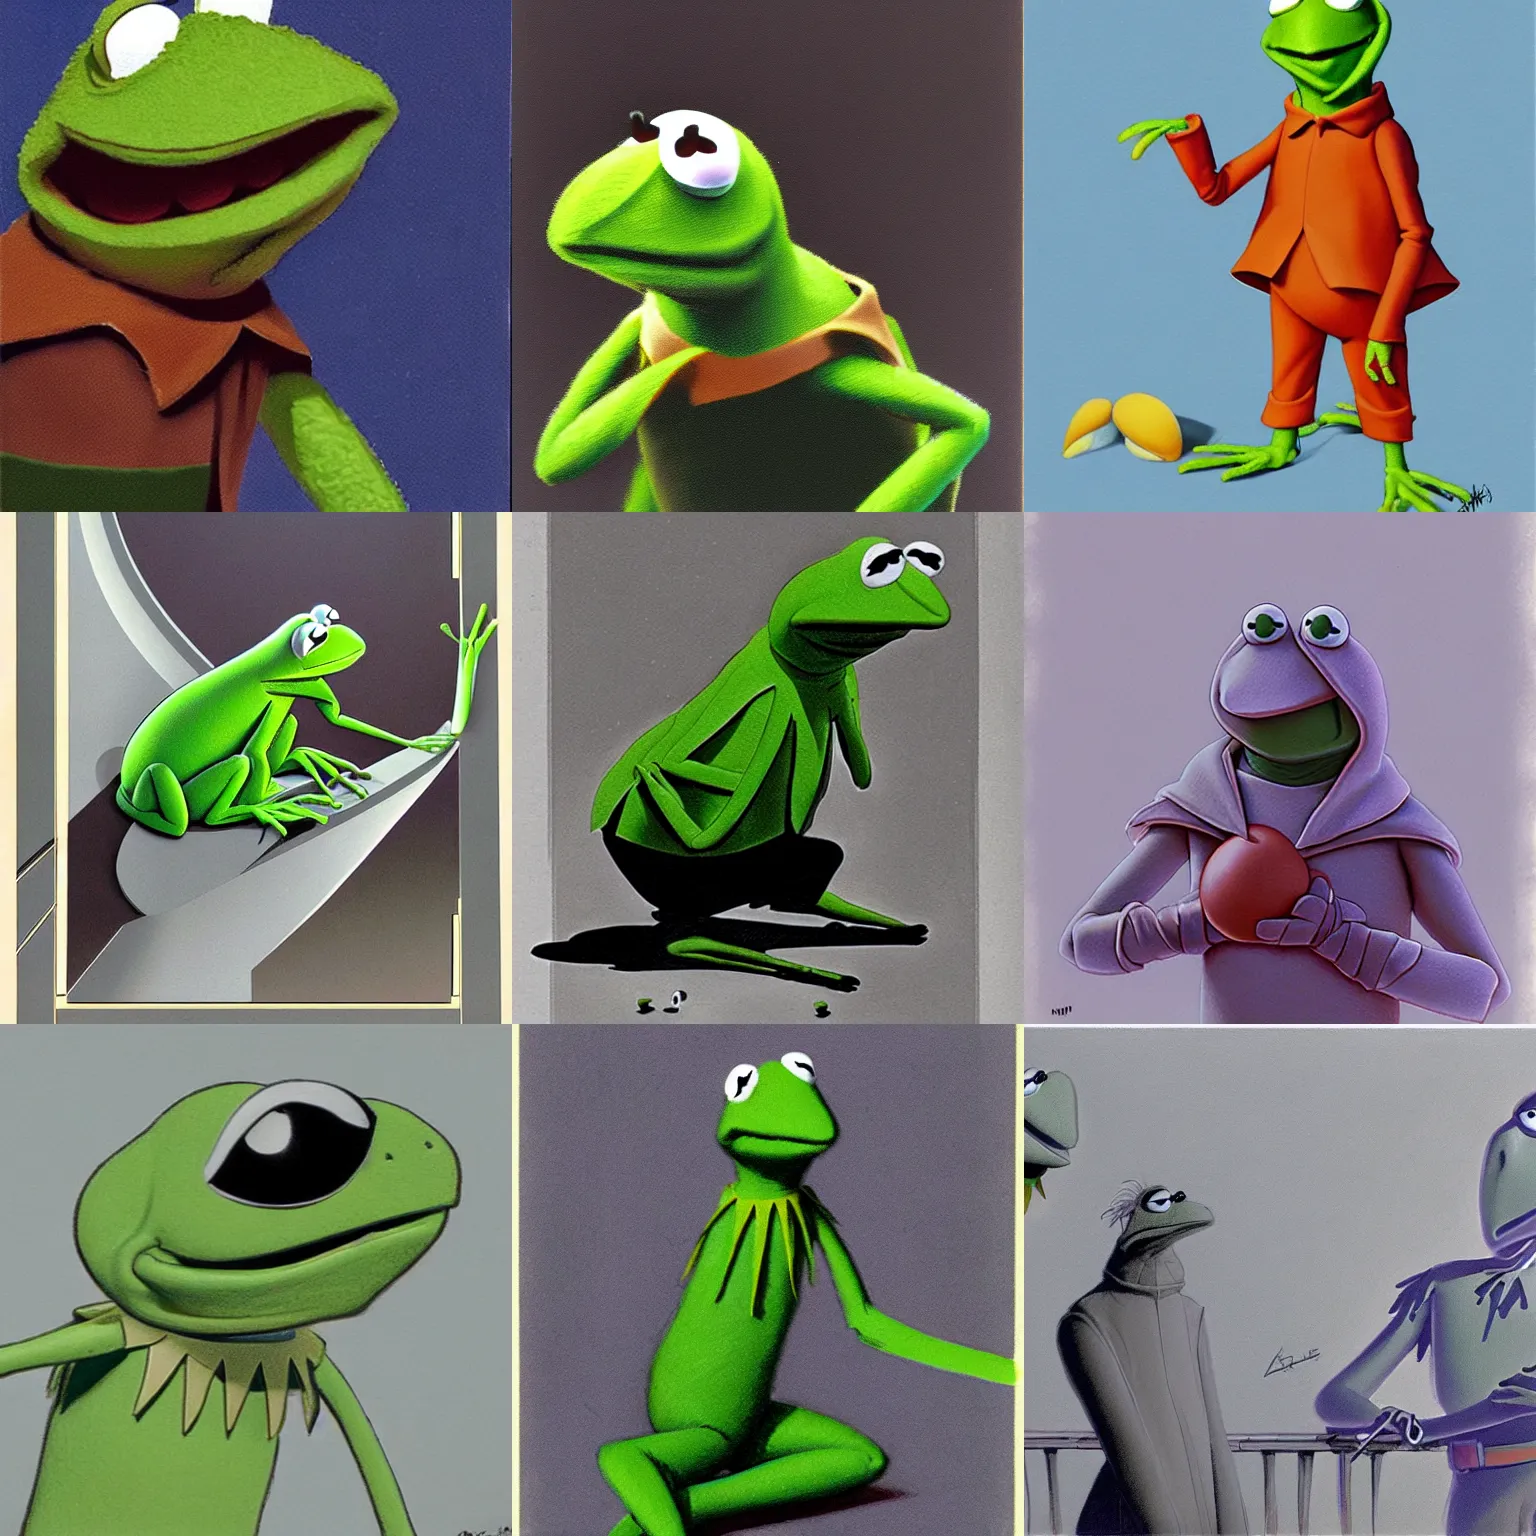 Prompt: kermit the frog ralph mcquarrie concept art